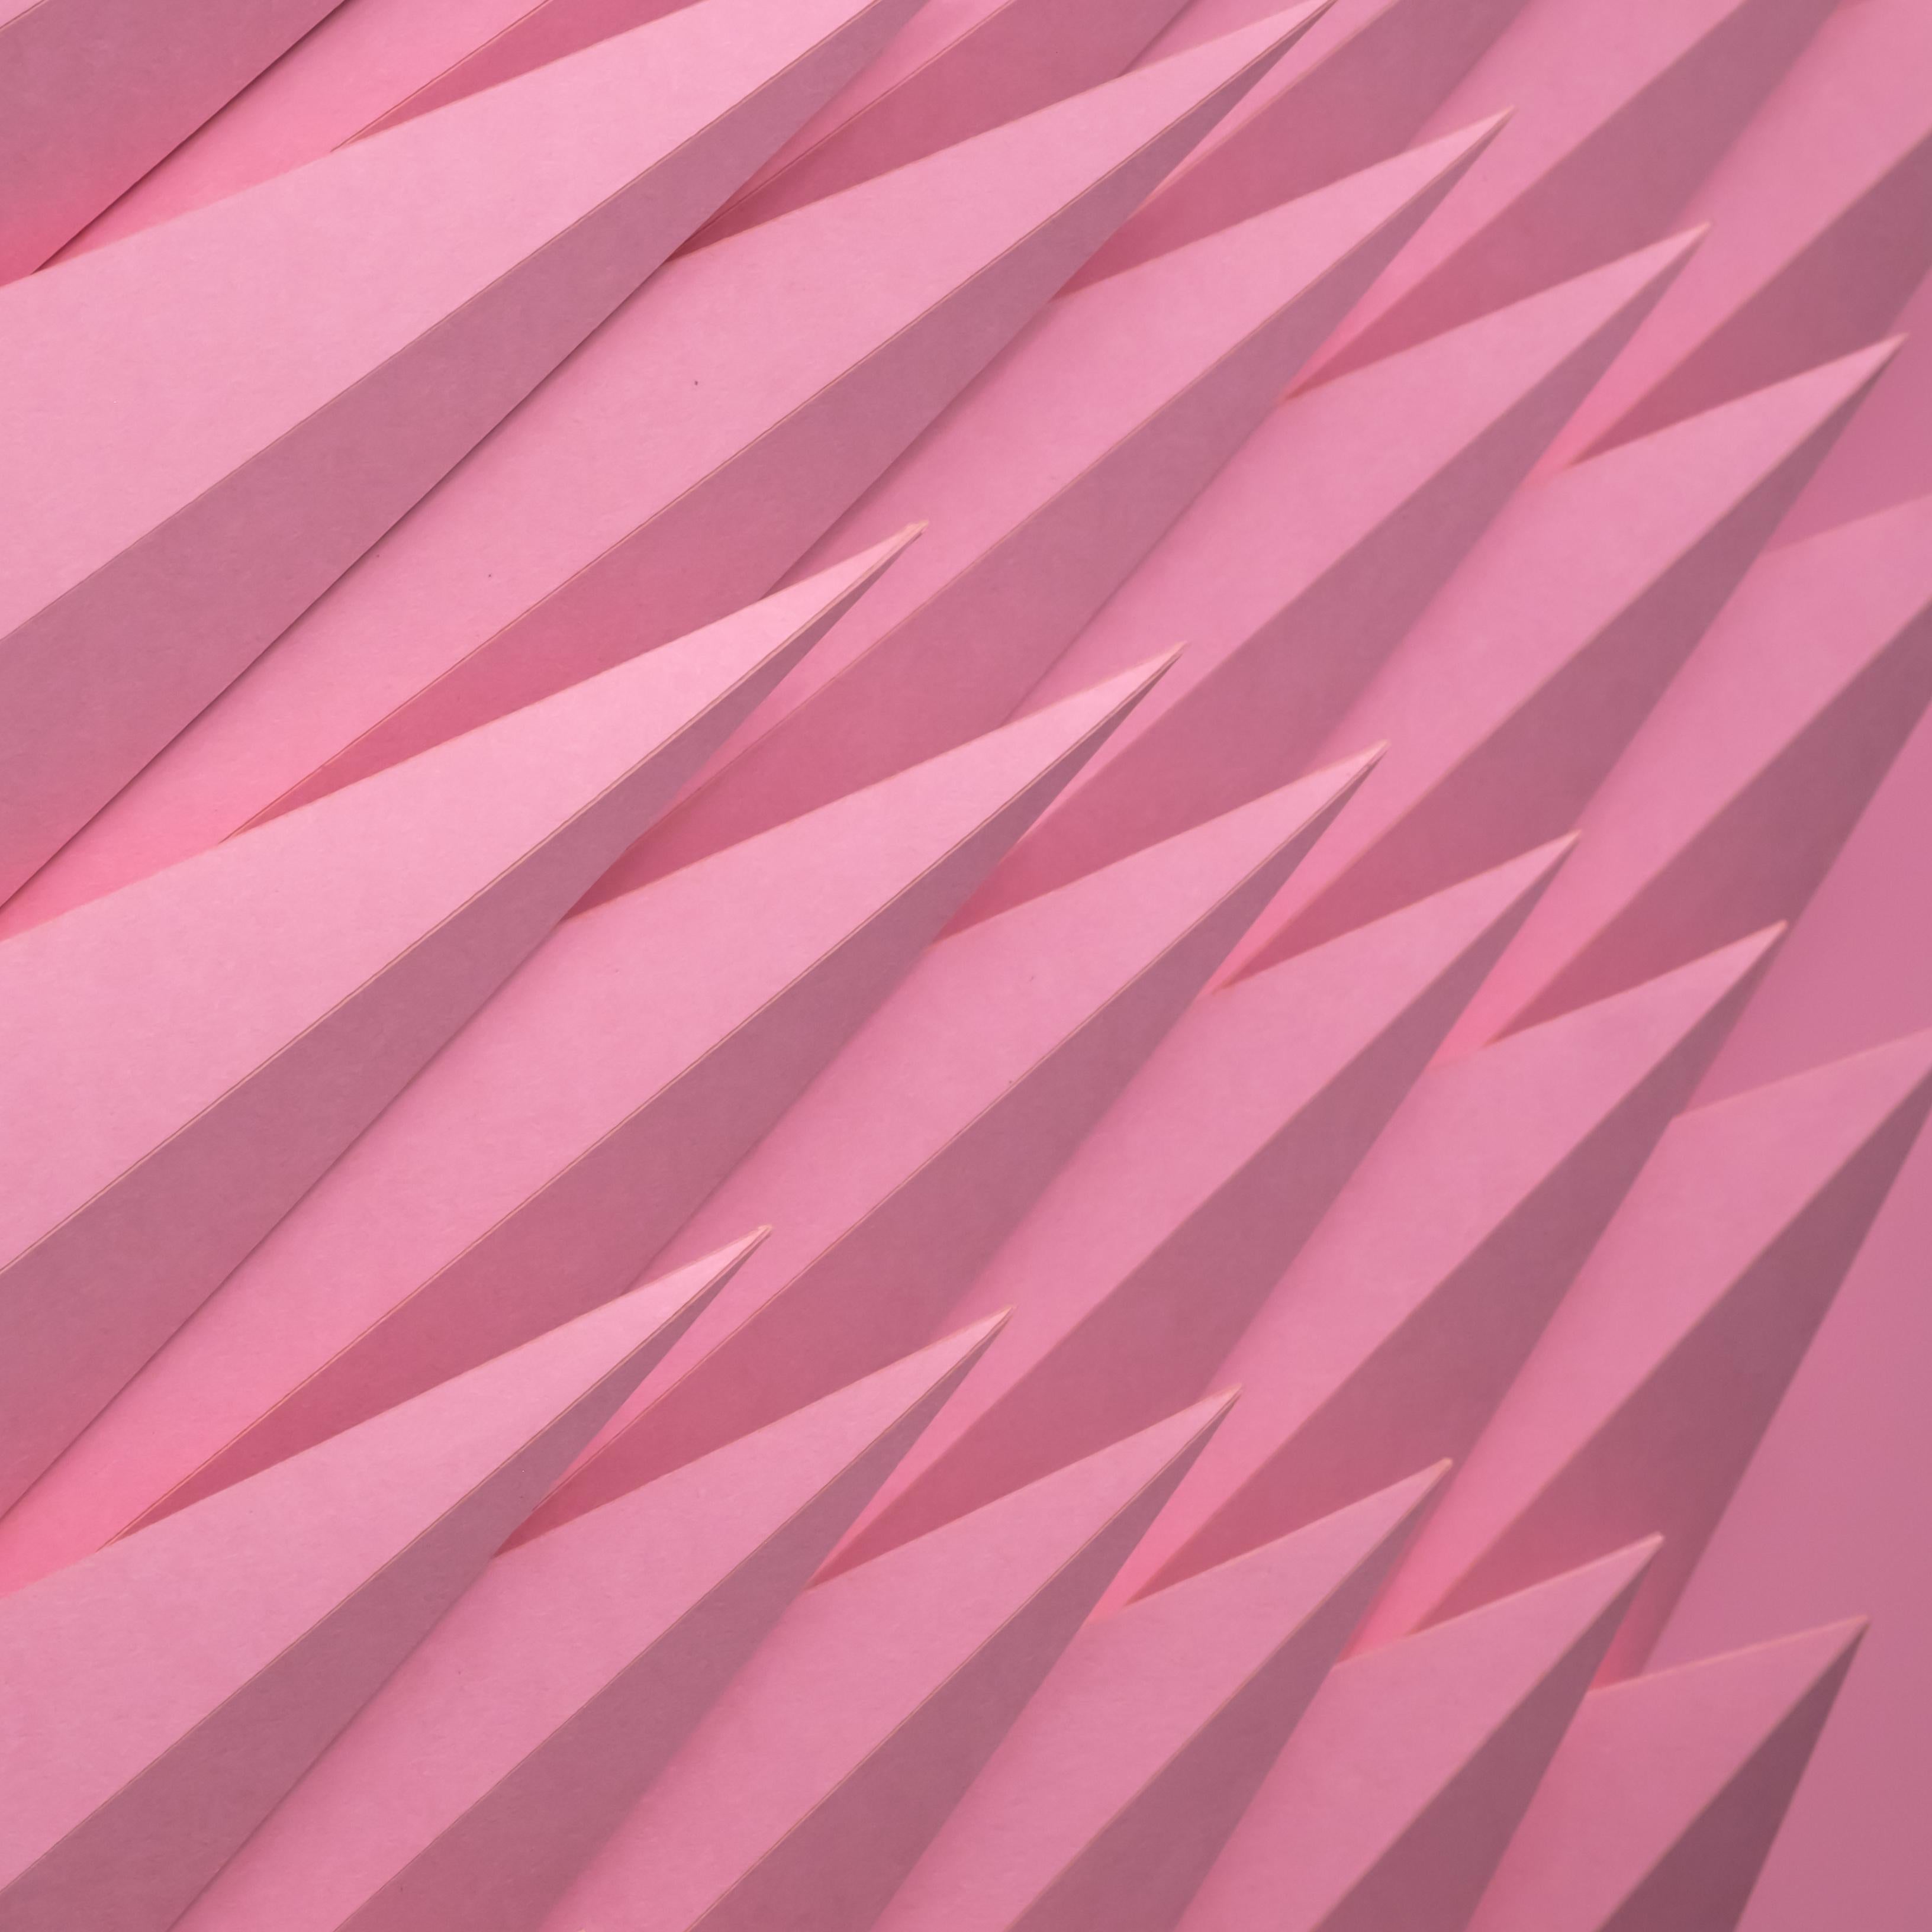 Pink Swirl - Abstract Geometric Painting by Yossi Ben Abu